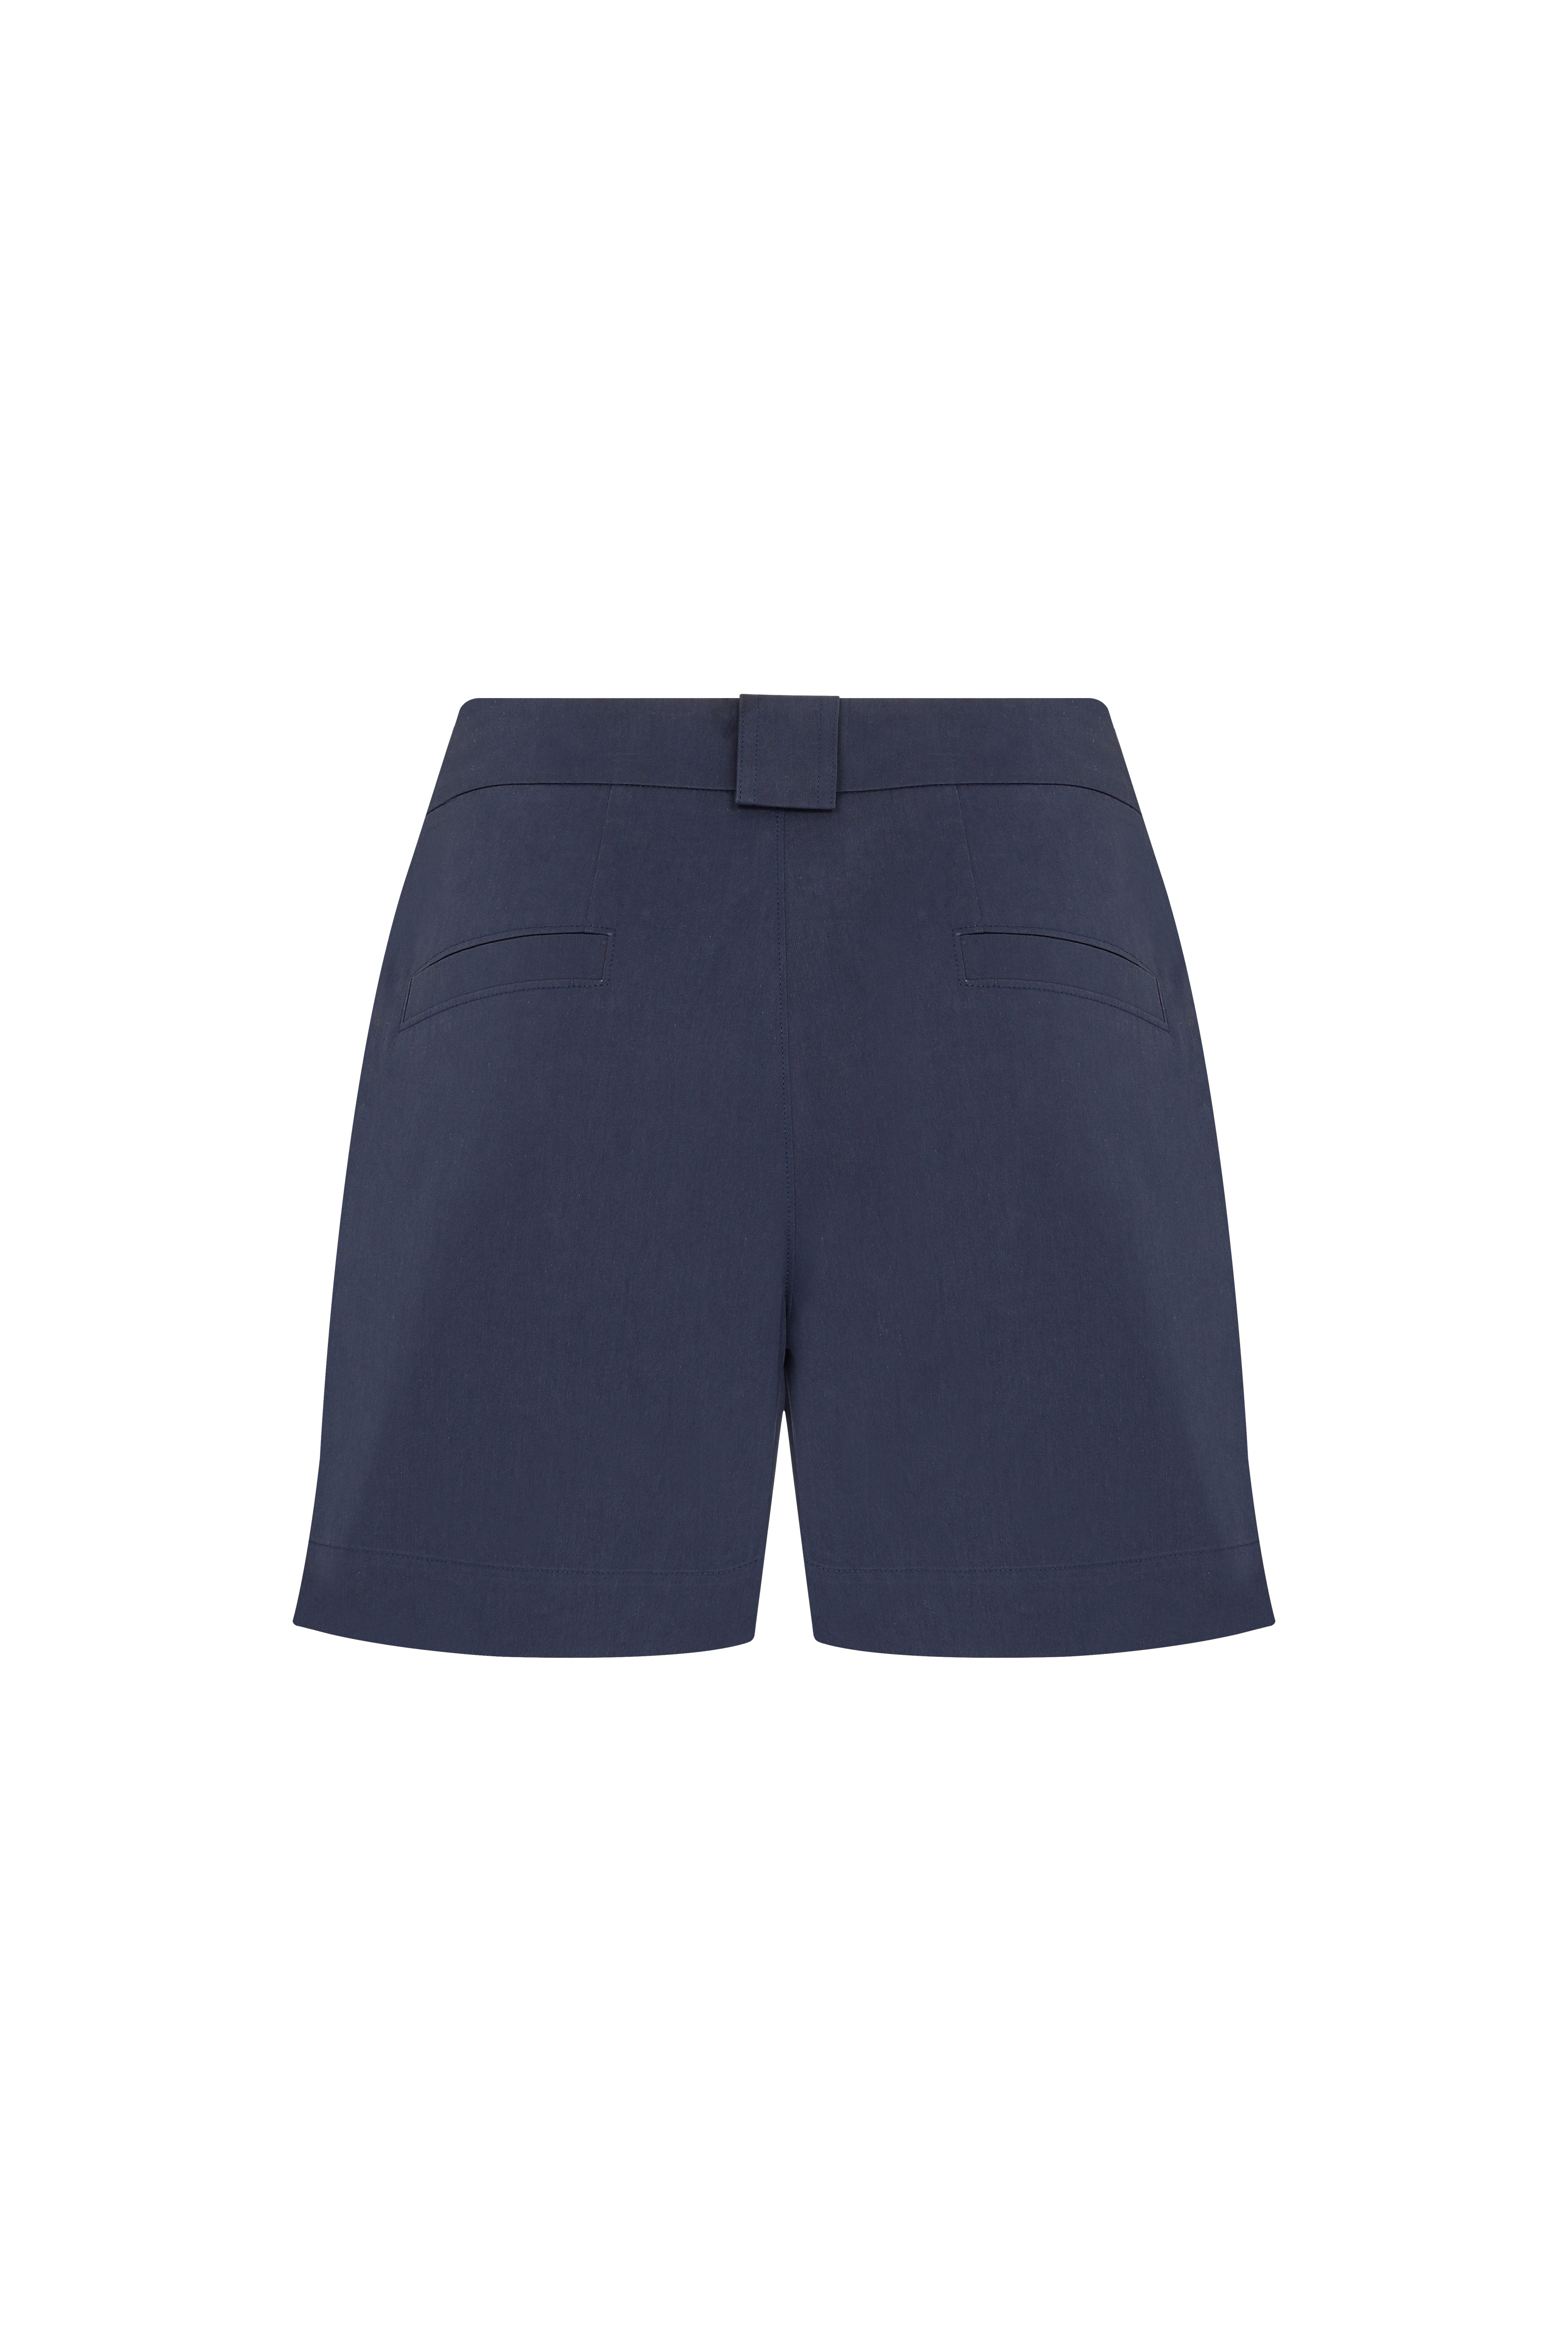 Navy Blue Classic Shorts